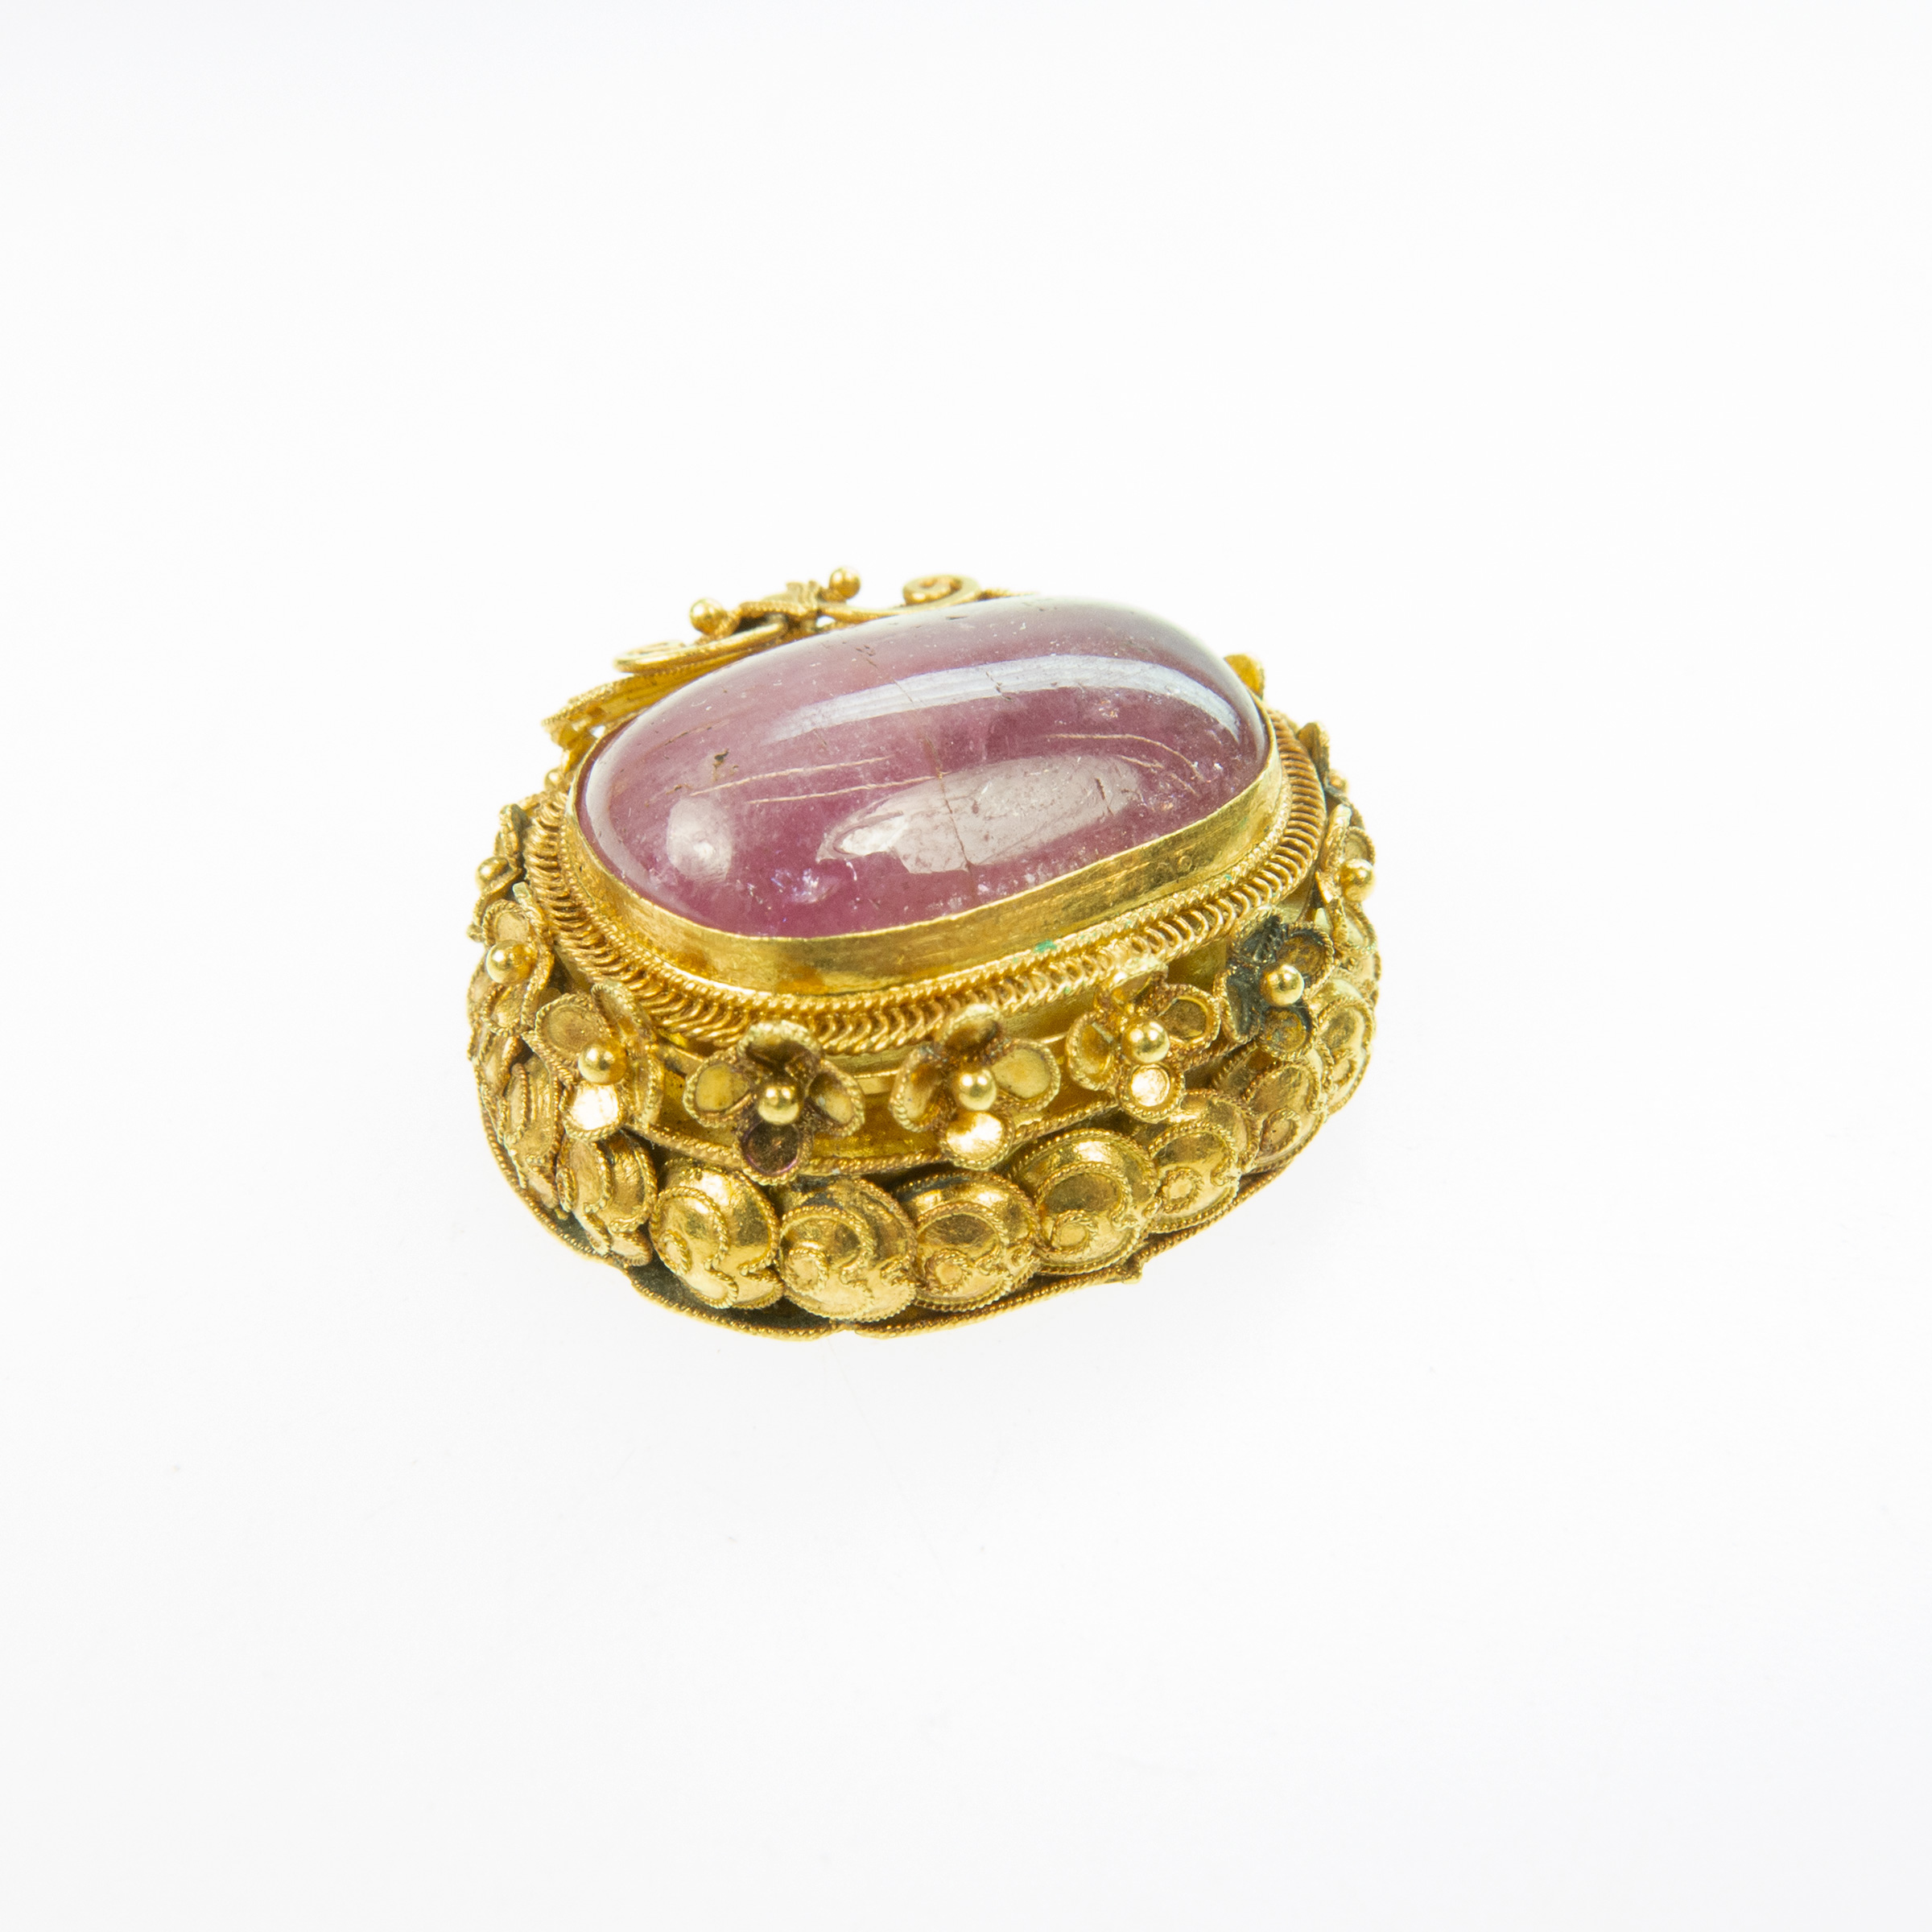 Ornate High Karat Gold Jewellery Fragment